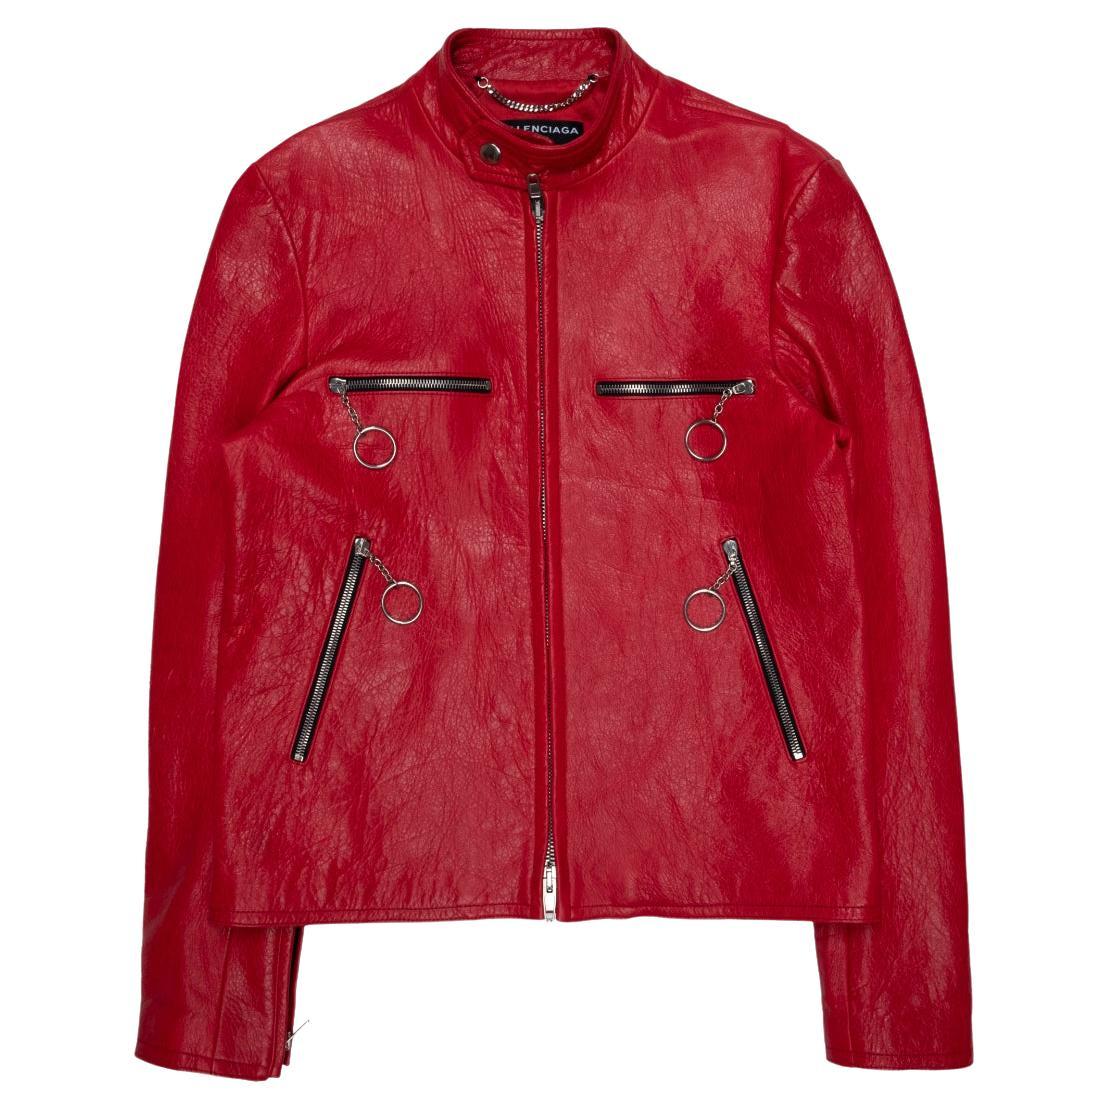 Balenciaga SS2017 Red Leather Moto Jacket